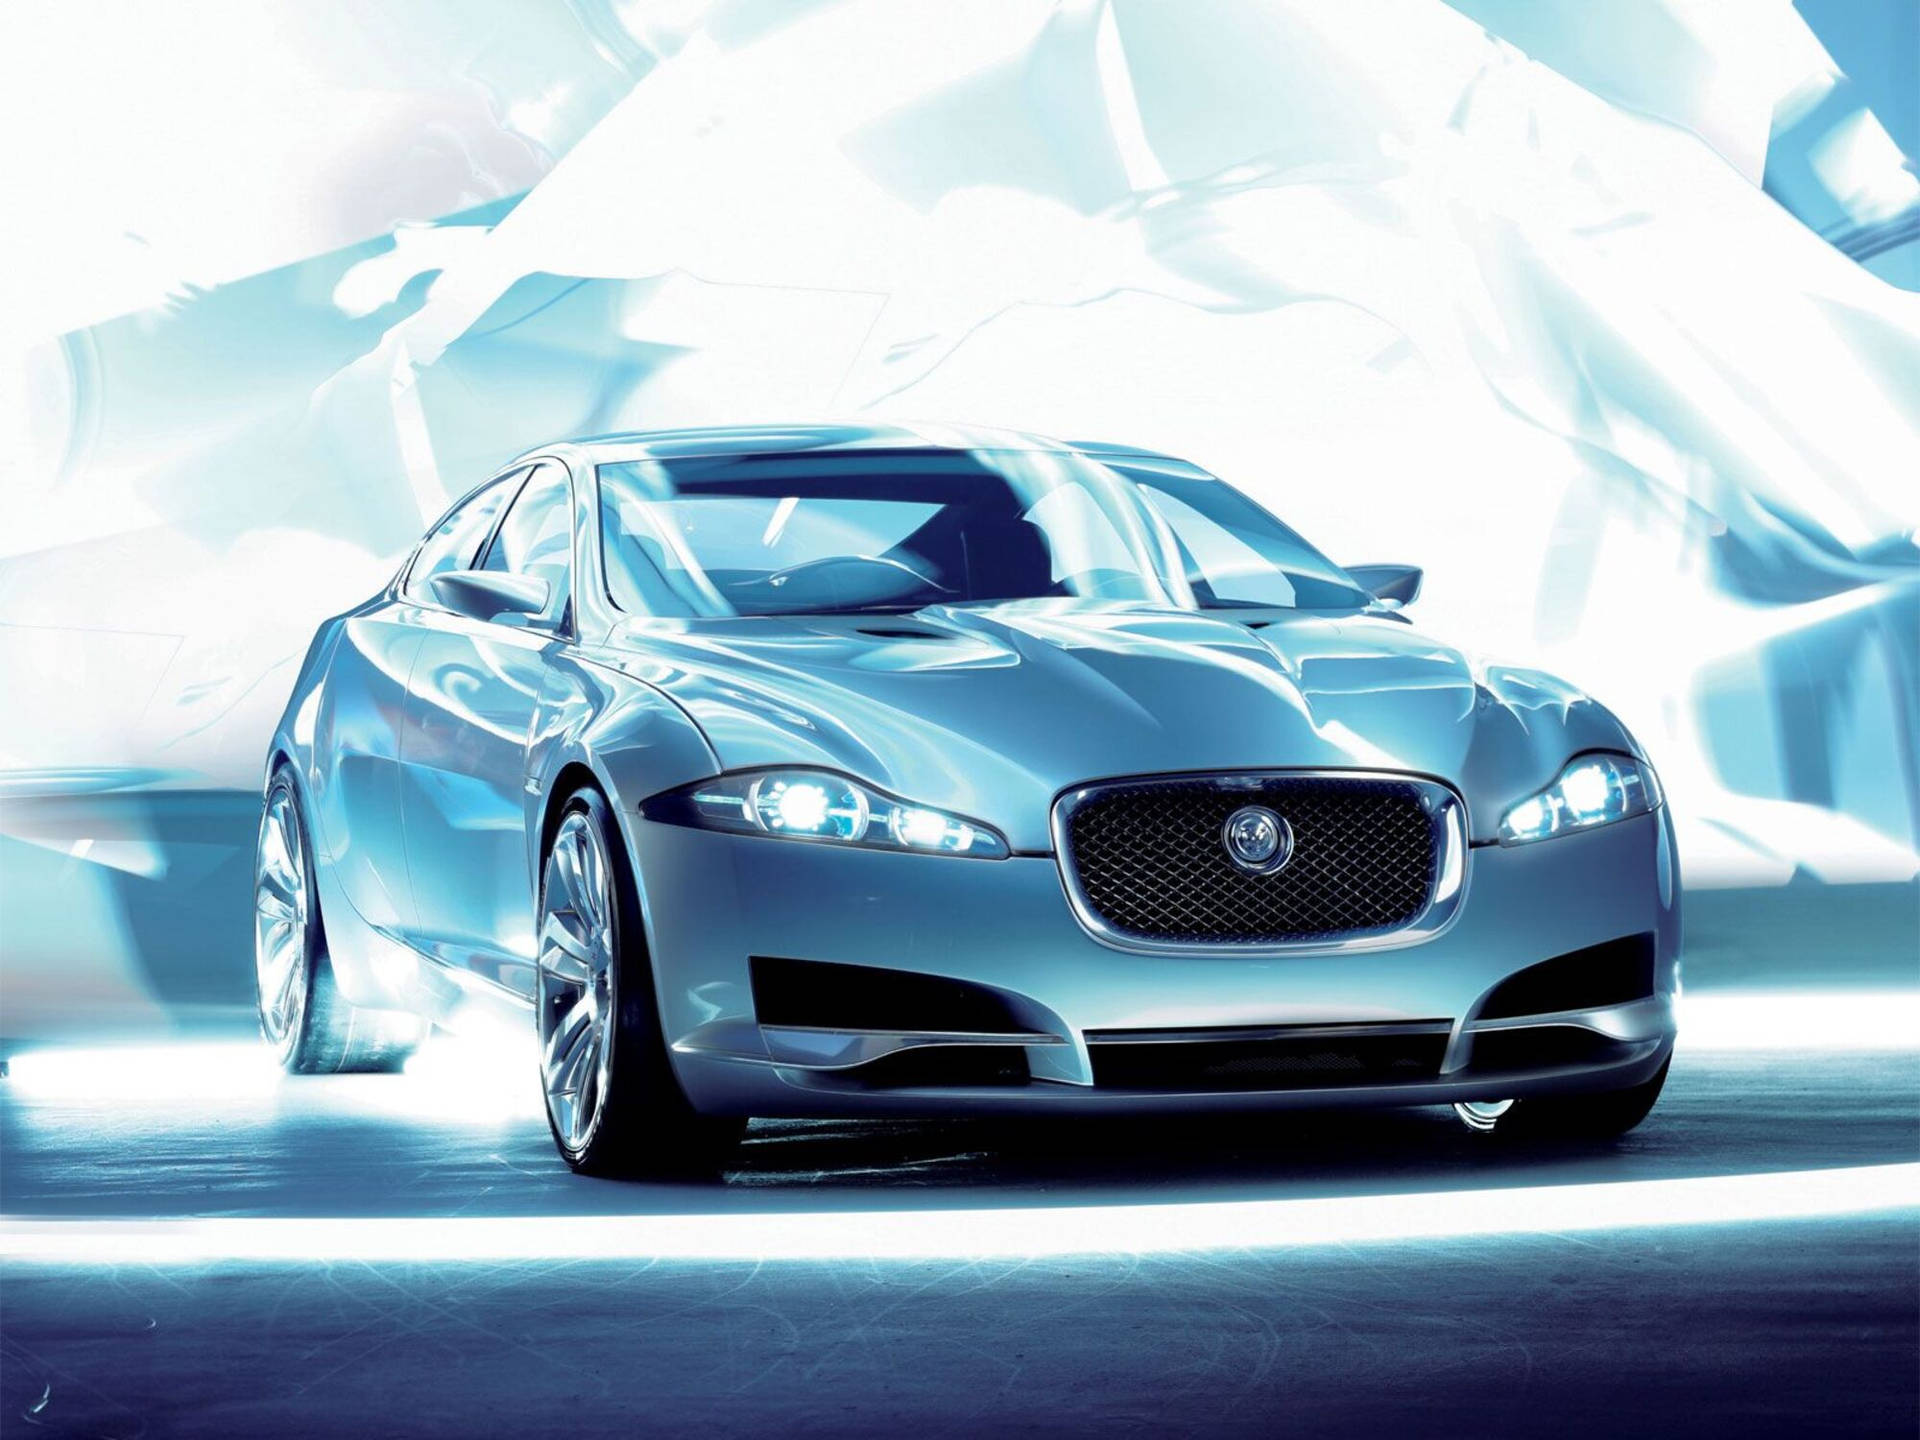 Feel the Power of the Futuristic Metallic Silver Jaguar Car Wallpaper